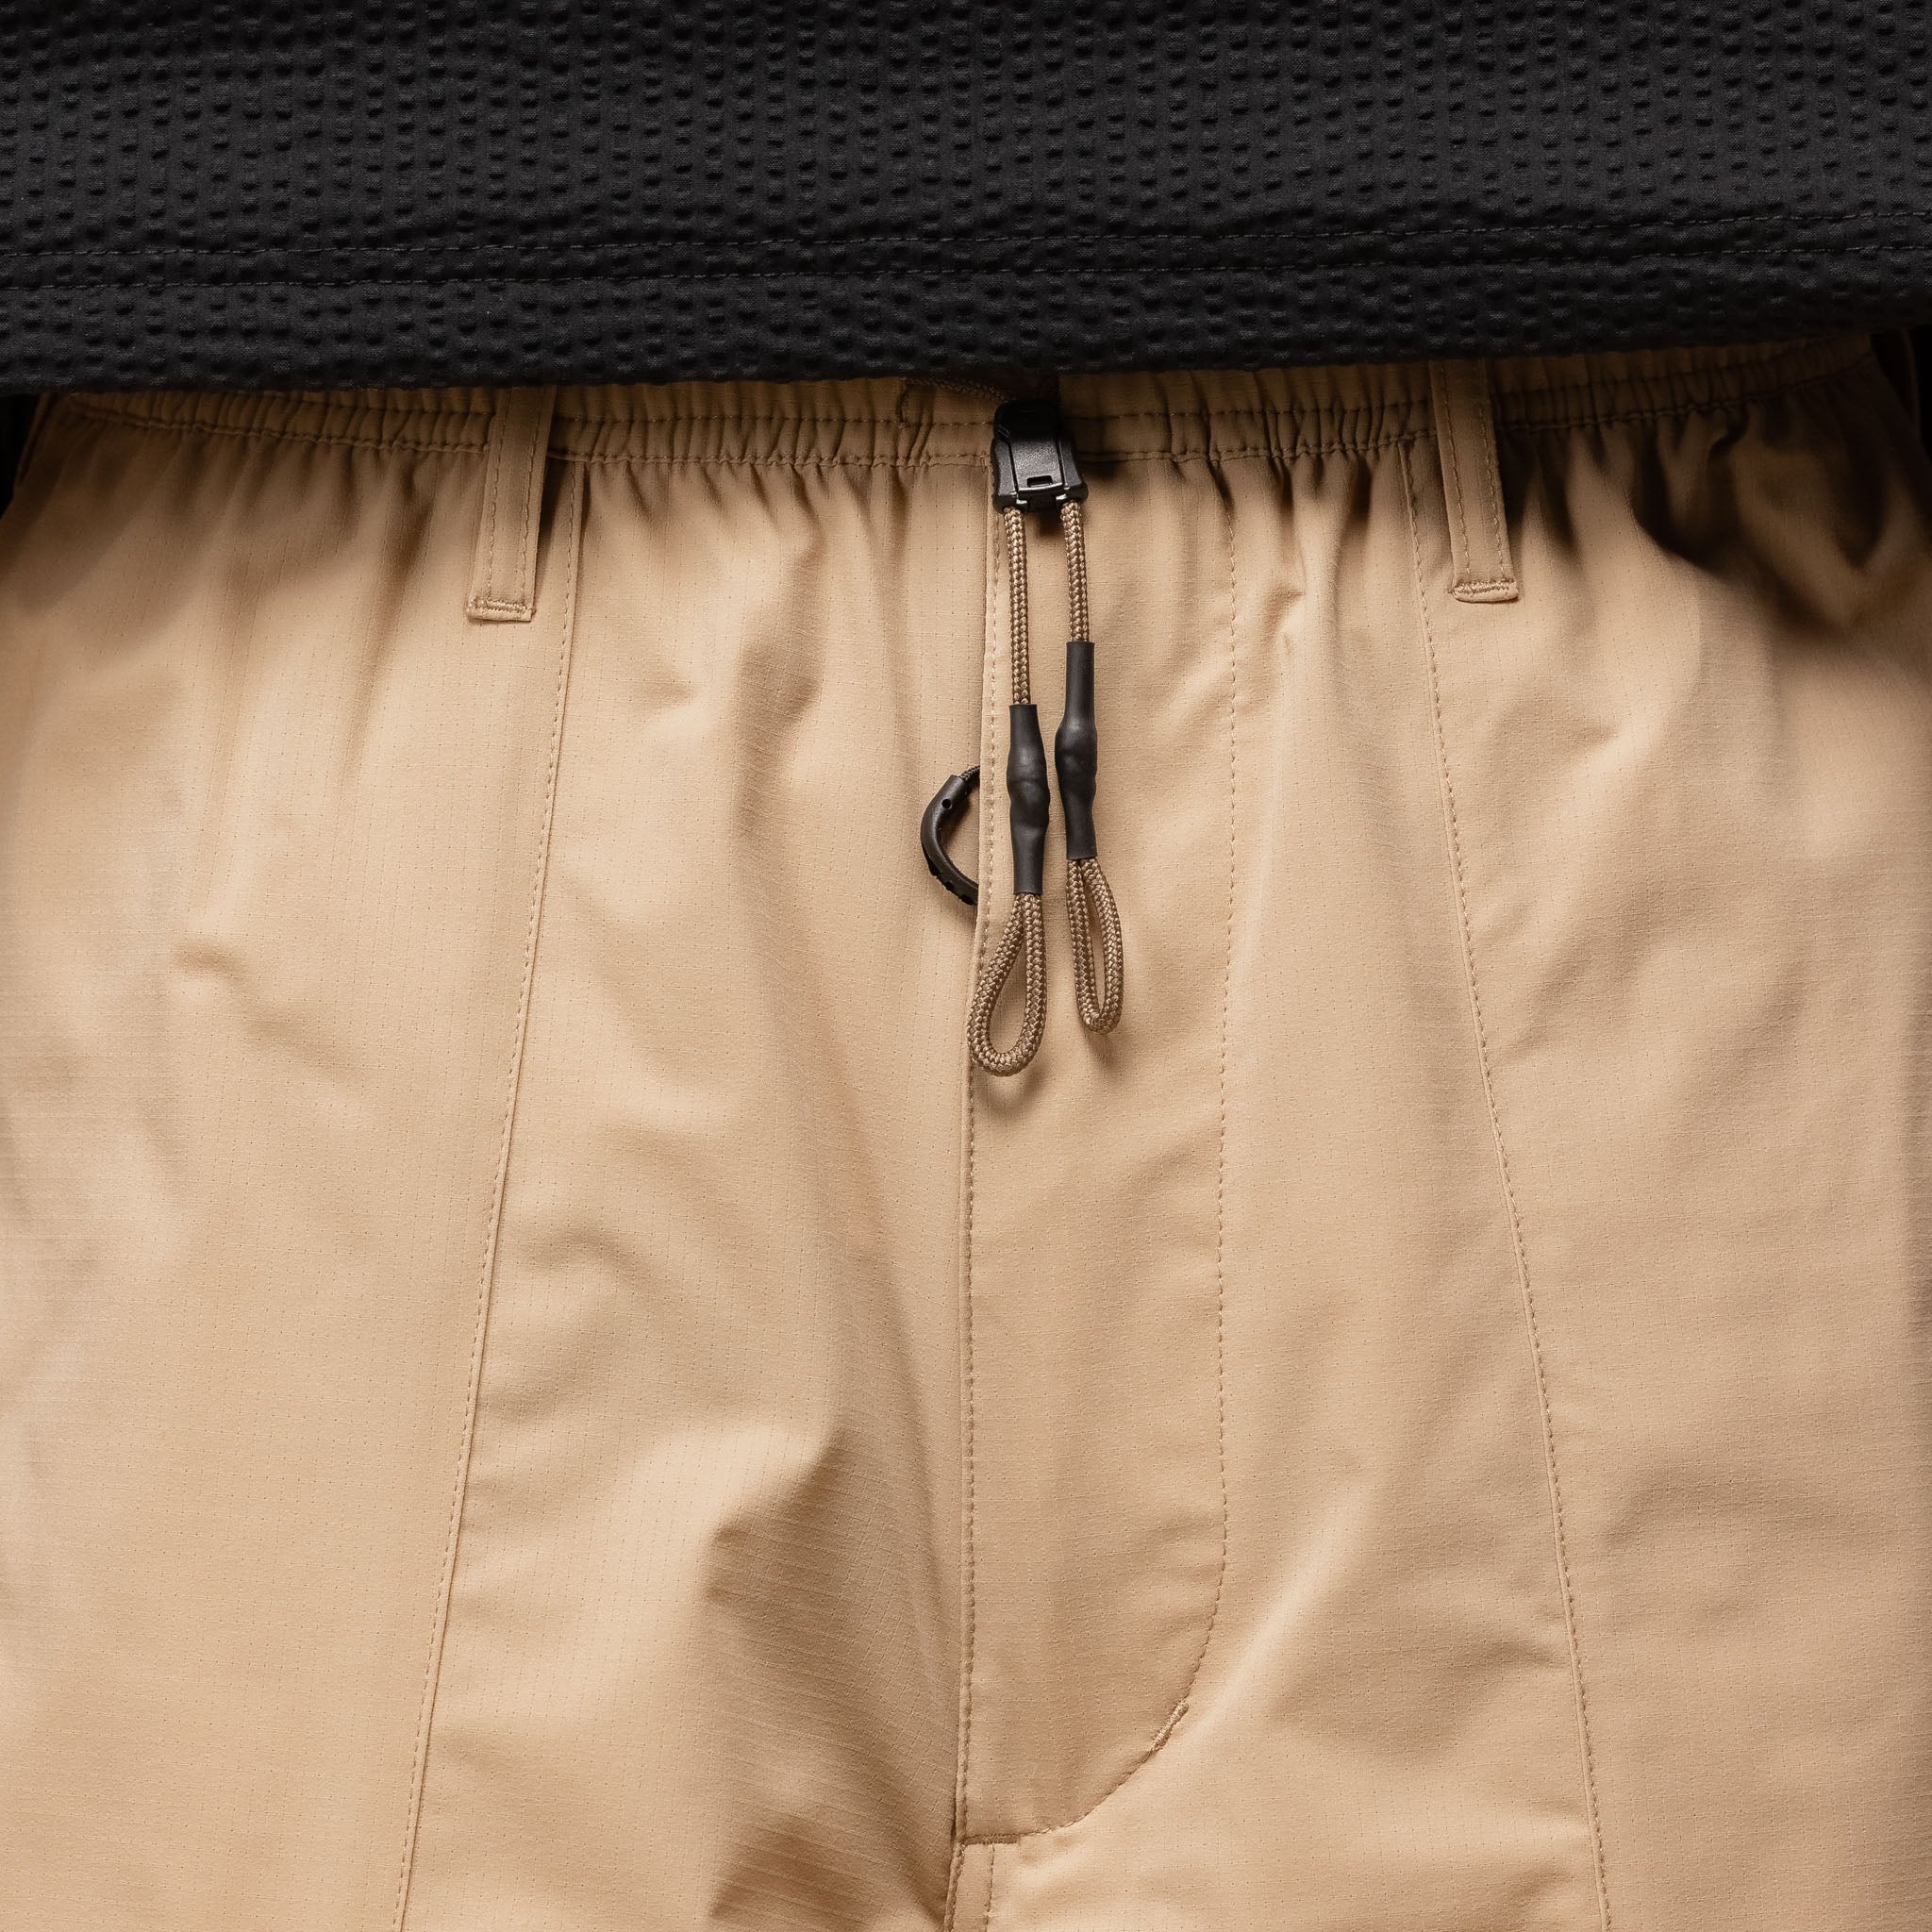 CMF Outdoor Garment - New Bug Shorts - Beige